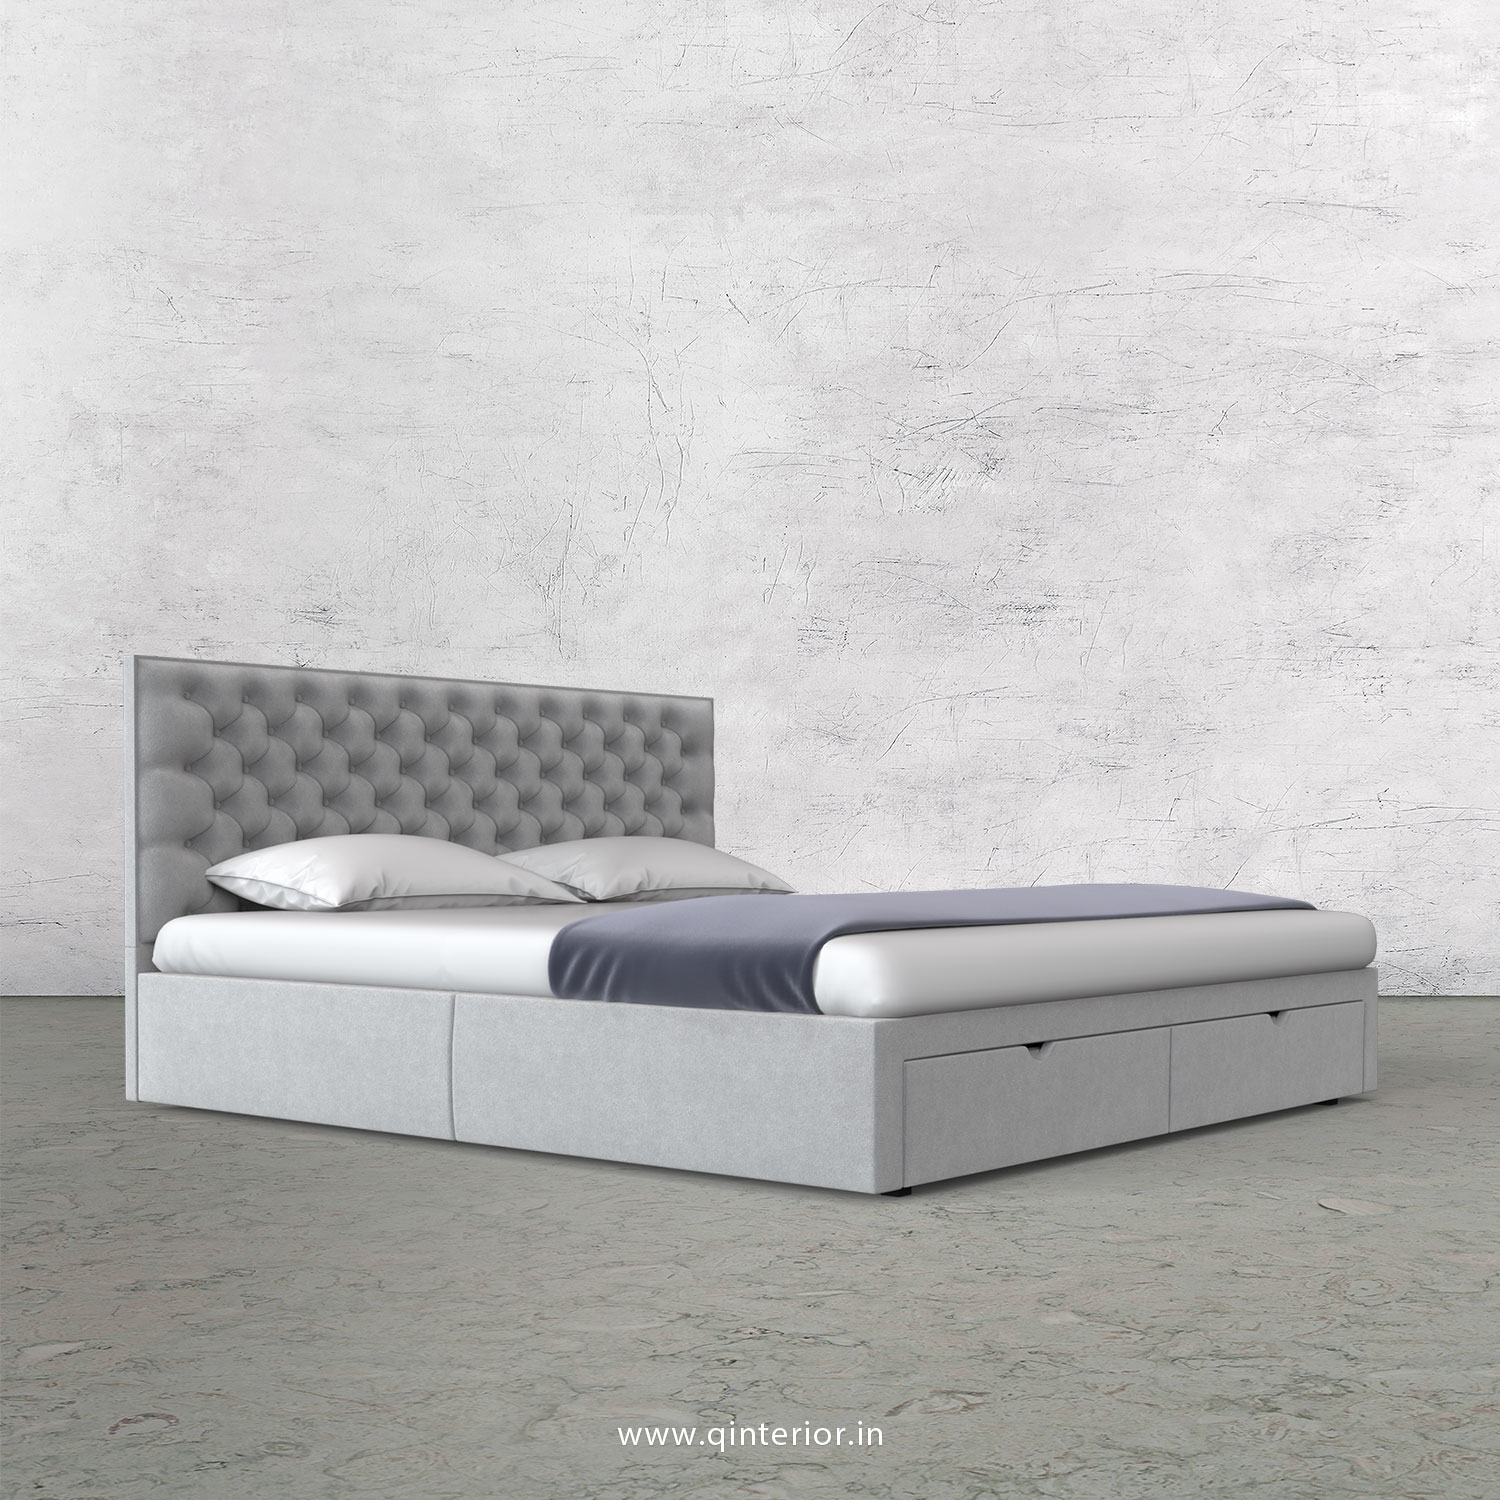 Orion King Size Storage Bed in Velvet Fabric - KBD001 VL06